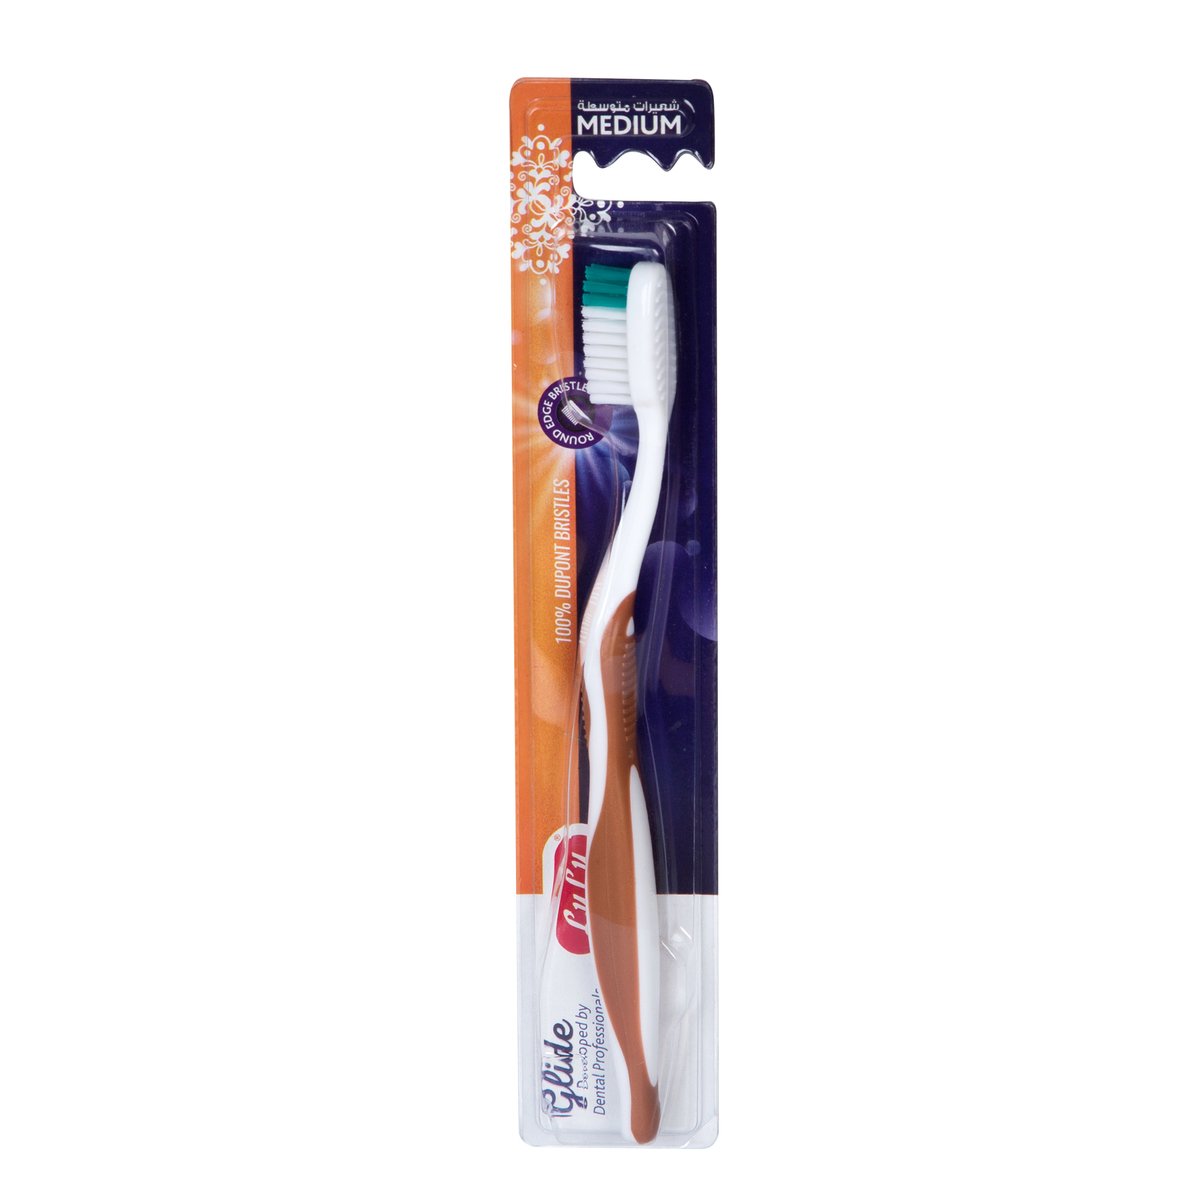 LuLu Toothbrush Glide Medium Assorted Color 1 pc